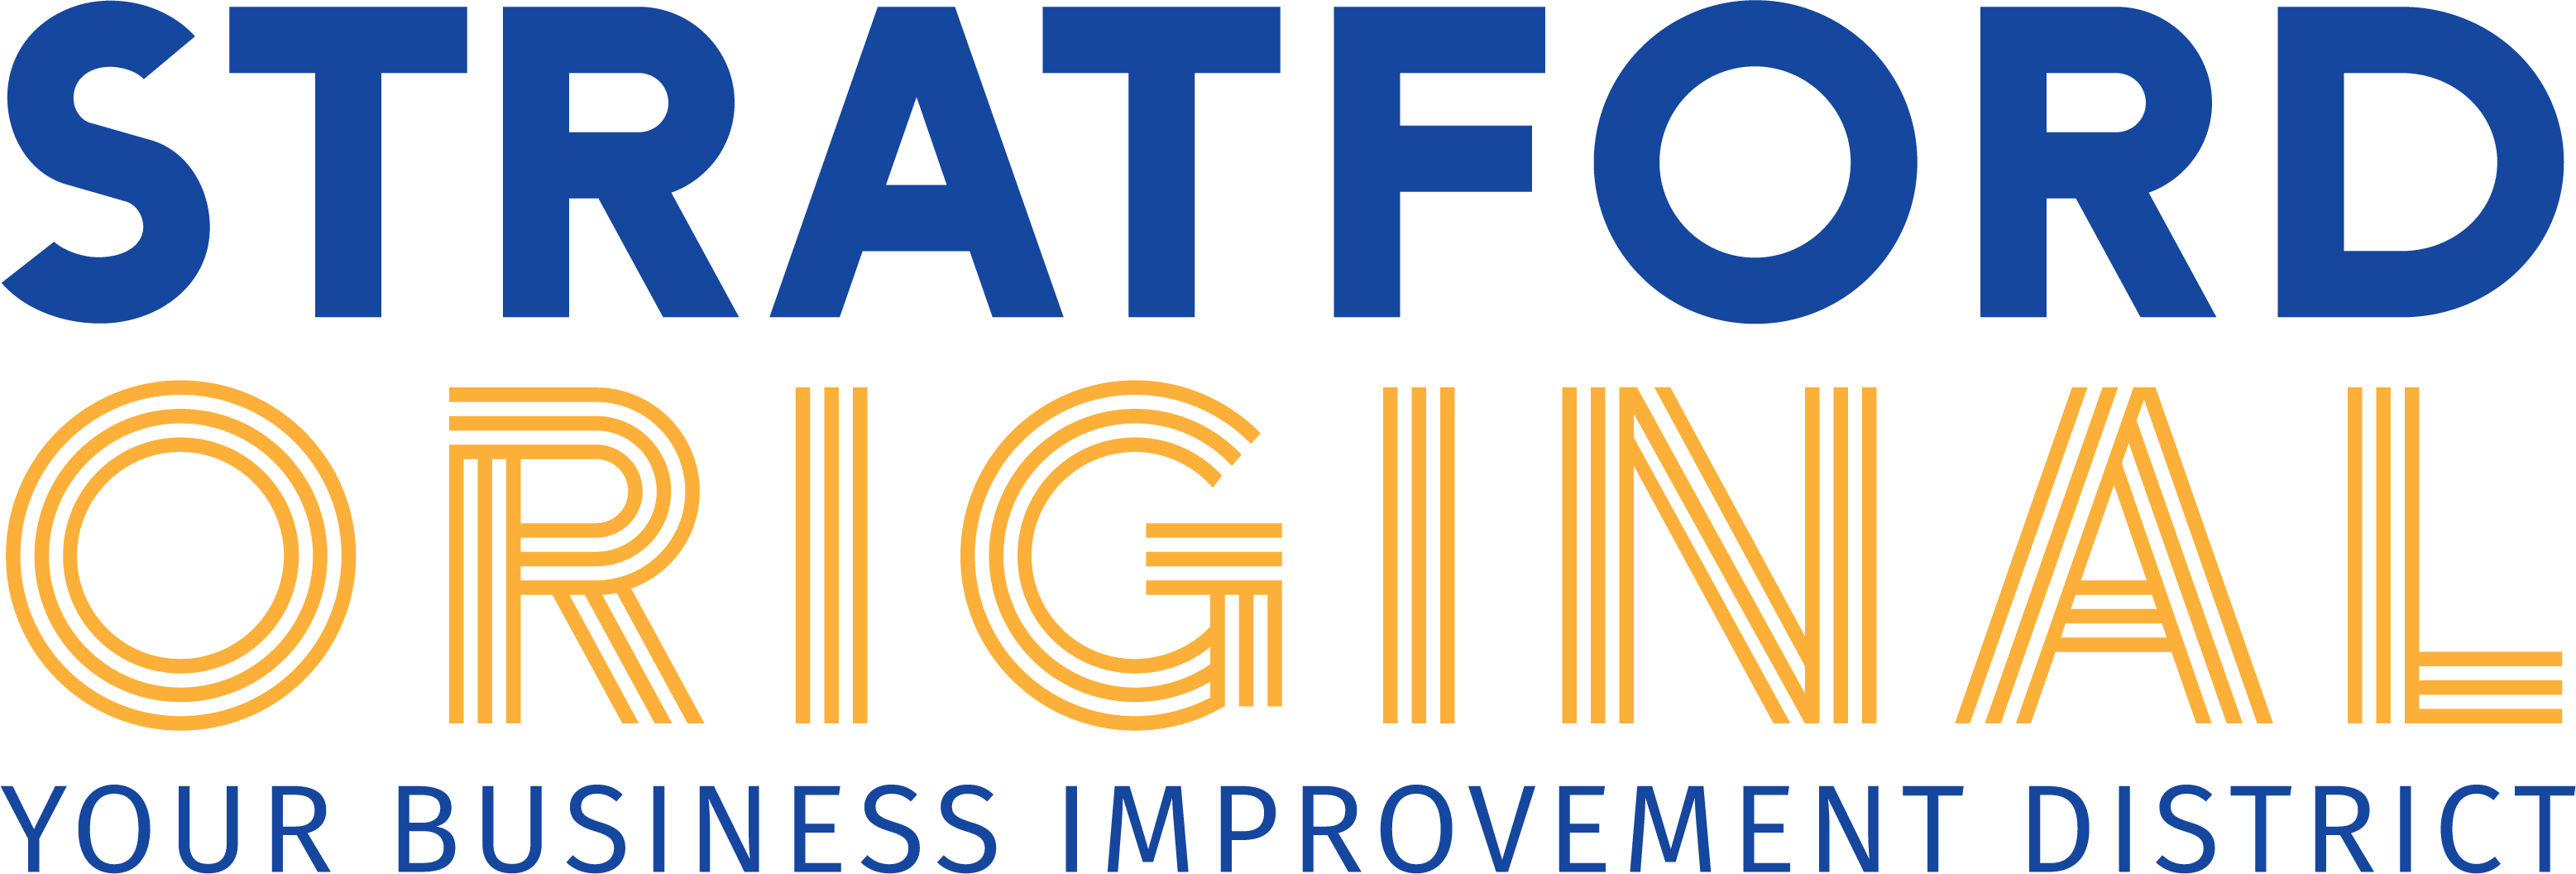 logo for Stratford Original Business Improvement District